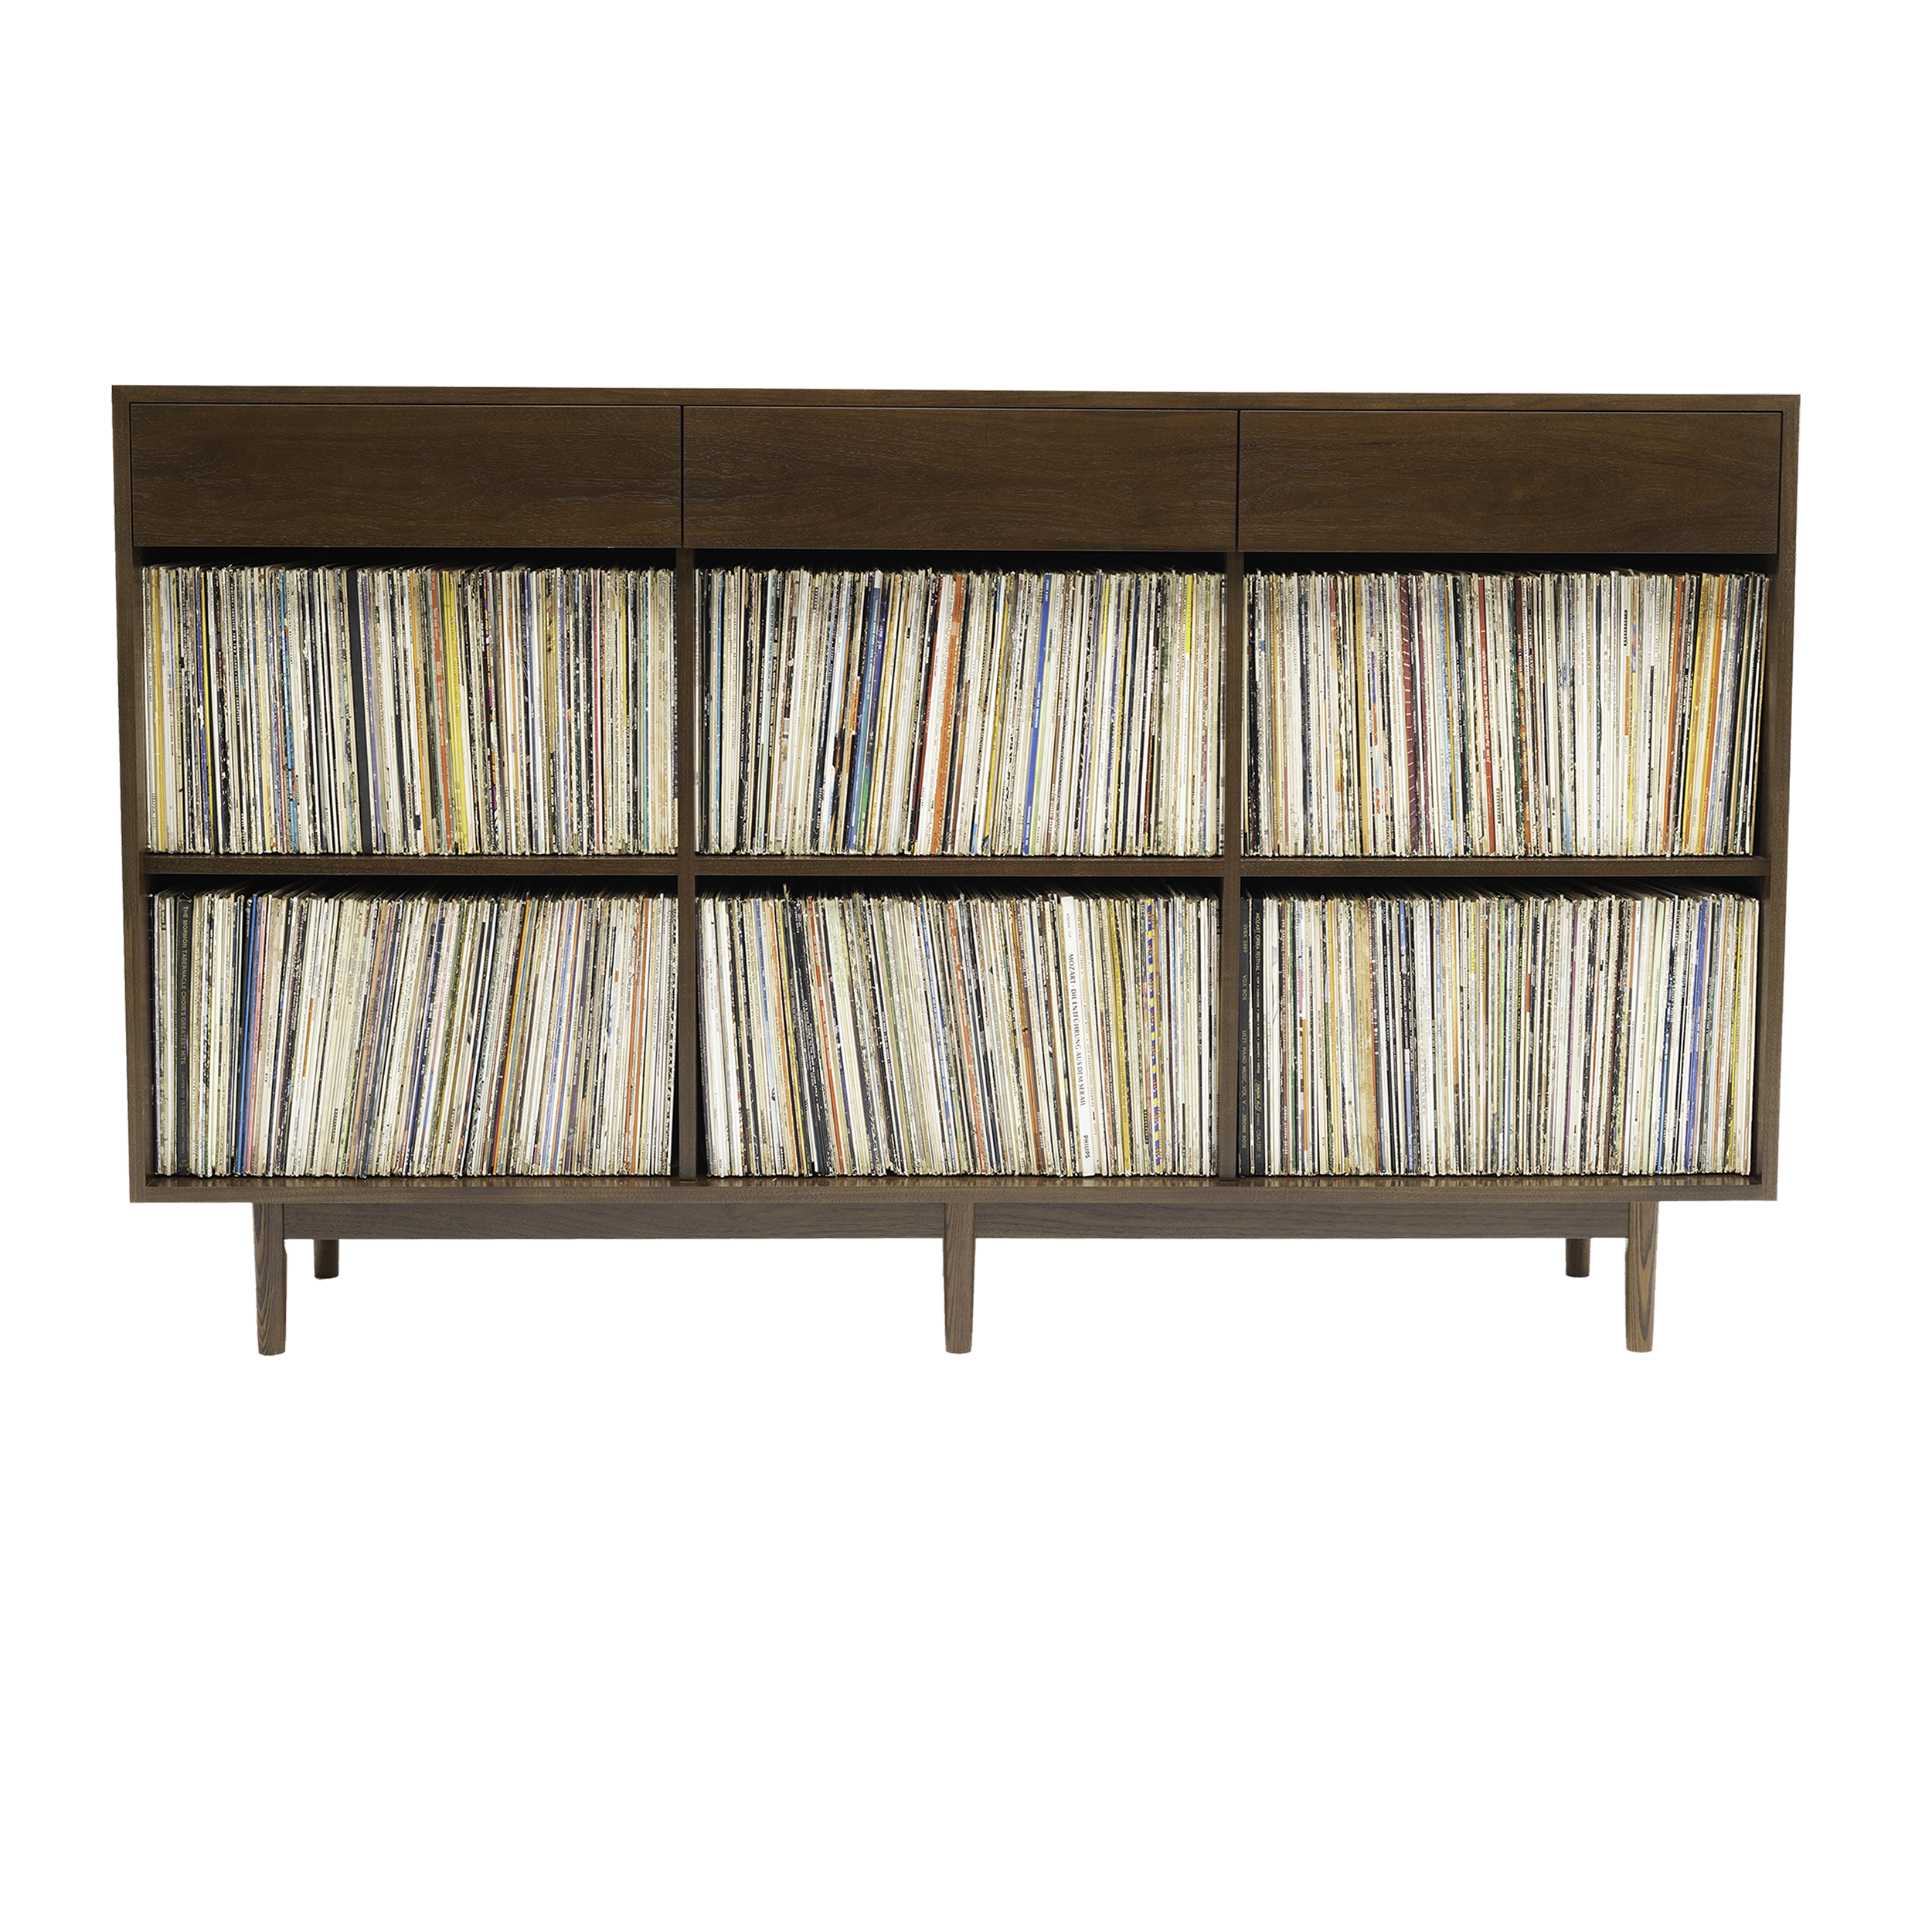 2 x 3 Drawer Record Storage Cabinet